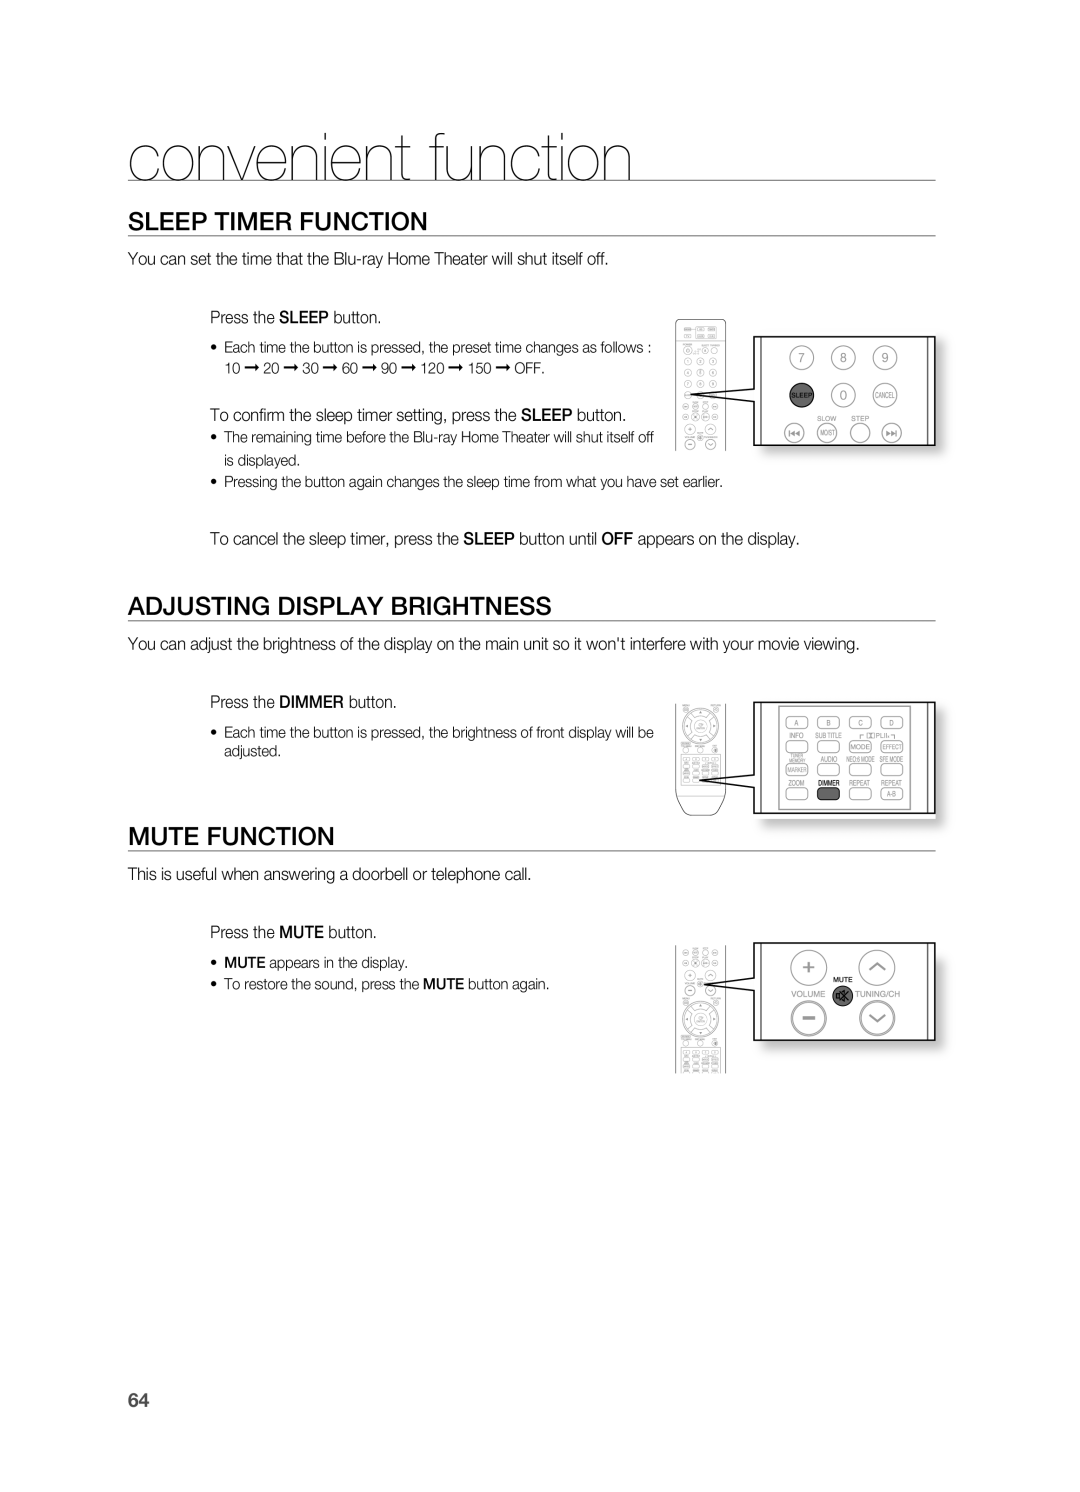 Samsung HT-BD2 manual convenient function, Sleep Timer Function, Adjusting Display Brightness, Mute Function 